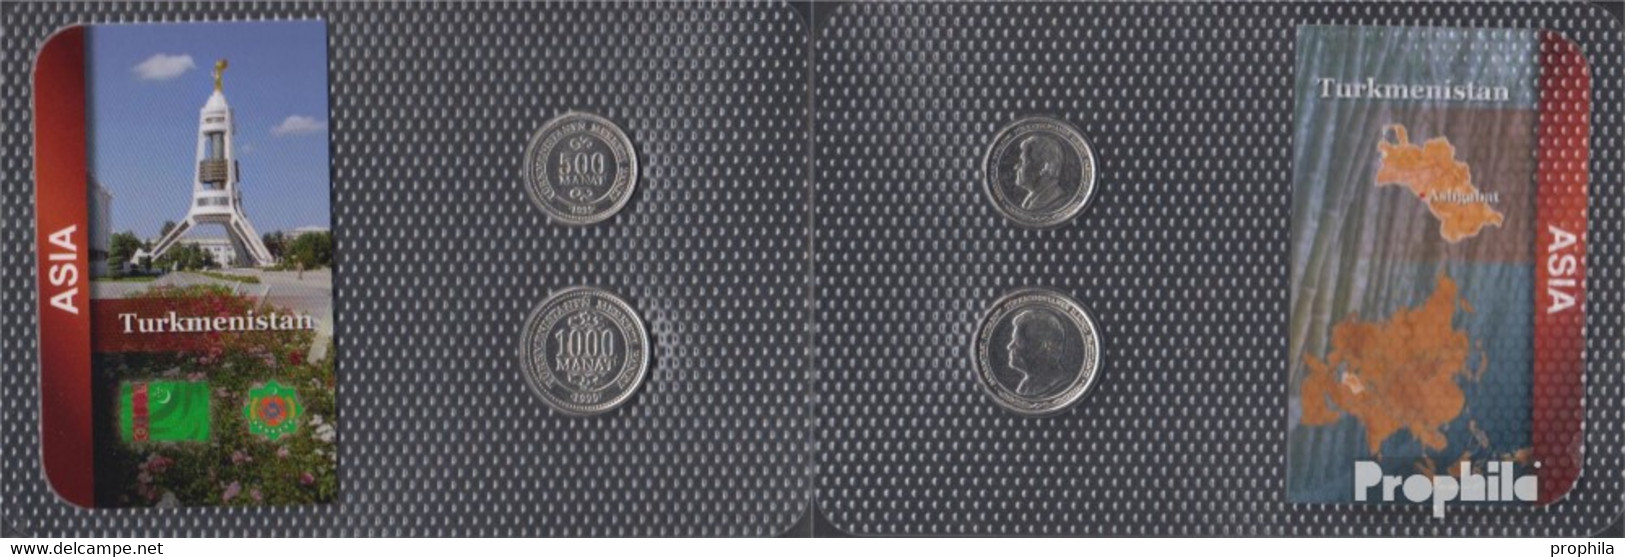 Turkmenistan 1999 Stgl./unzirkuliert Kursmünzen Stgl./unzirkuliert 1999 500 Bis 1.000 Manat - Turkmenistan